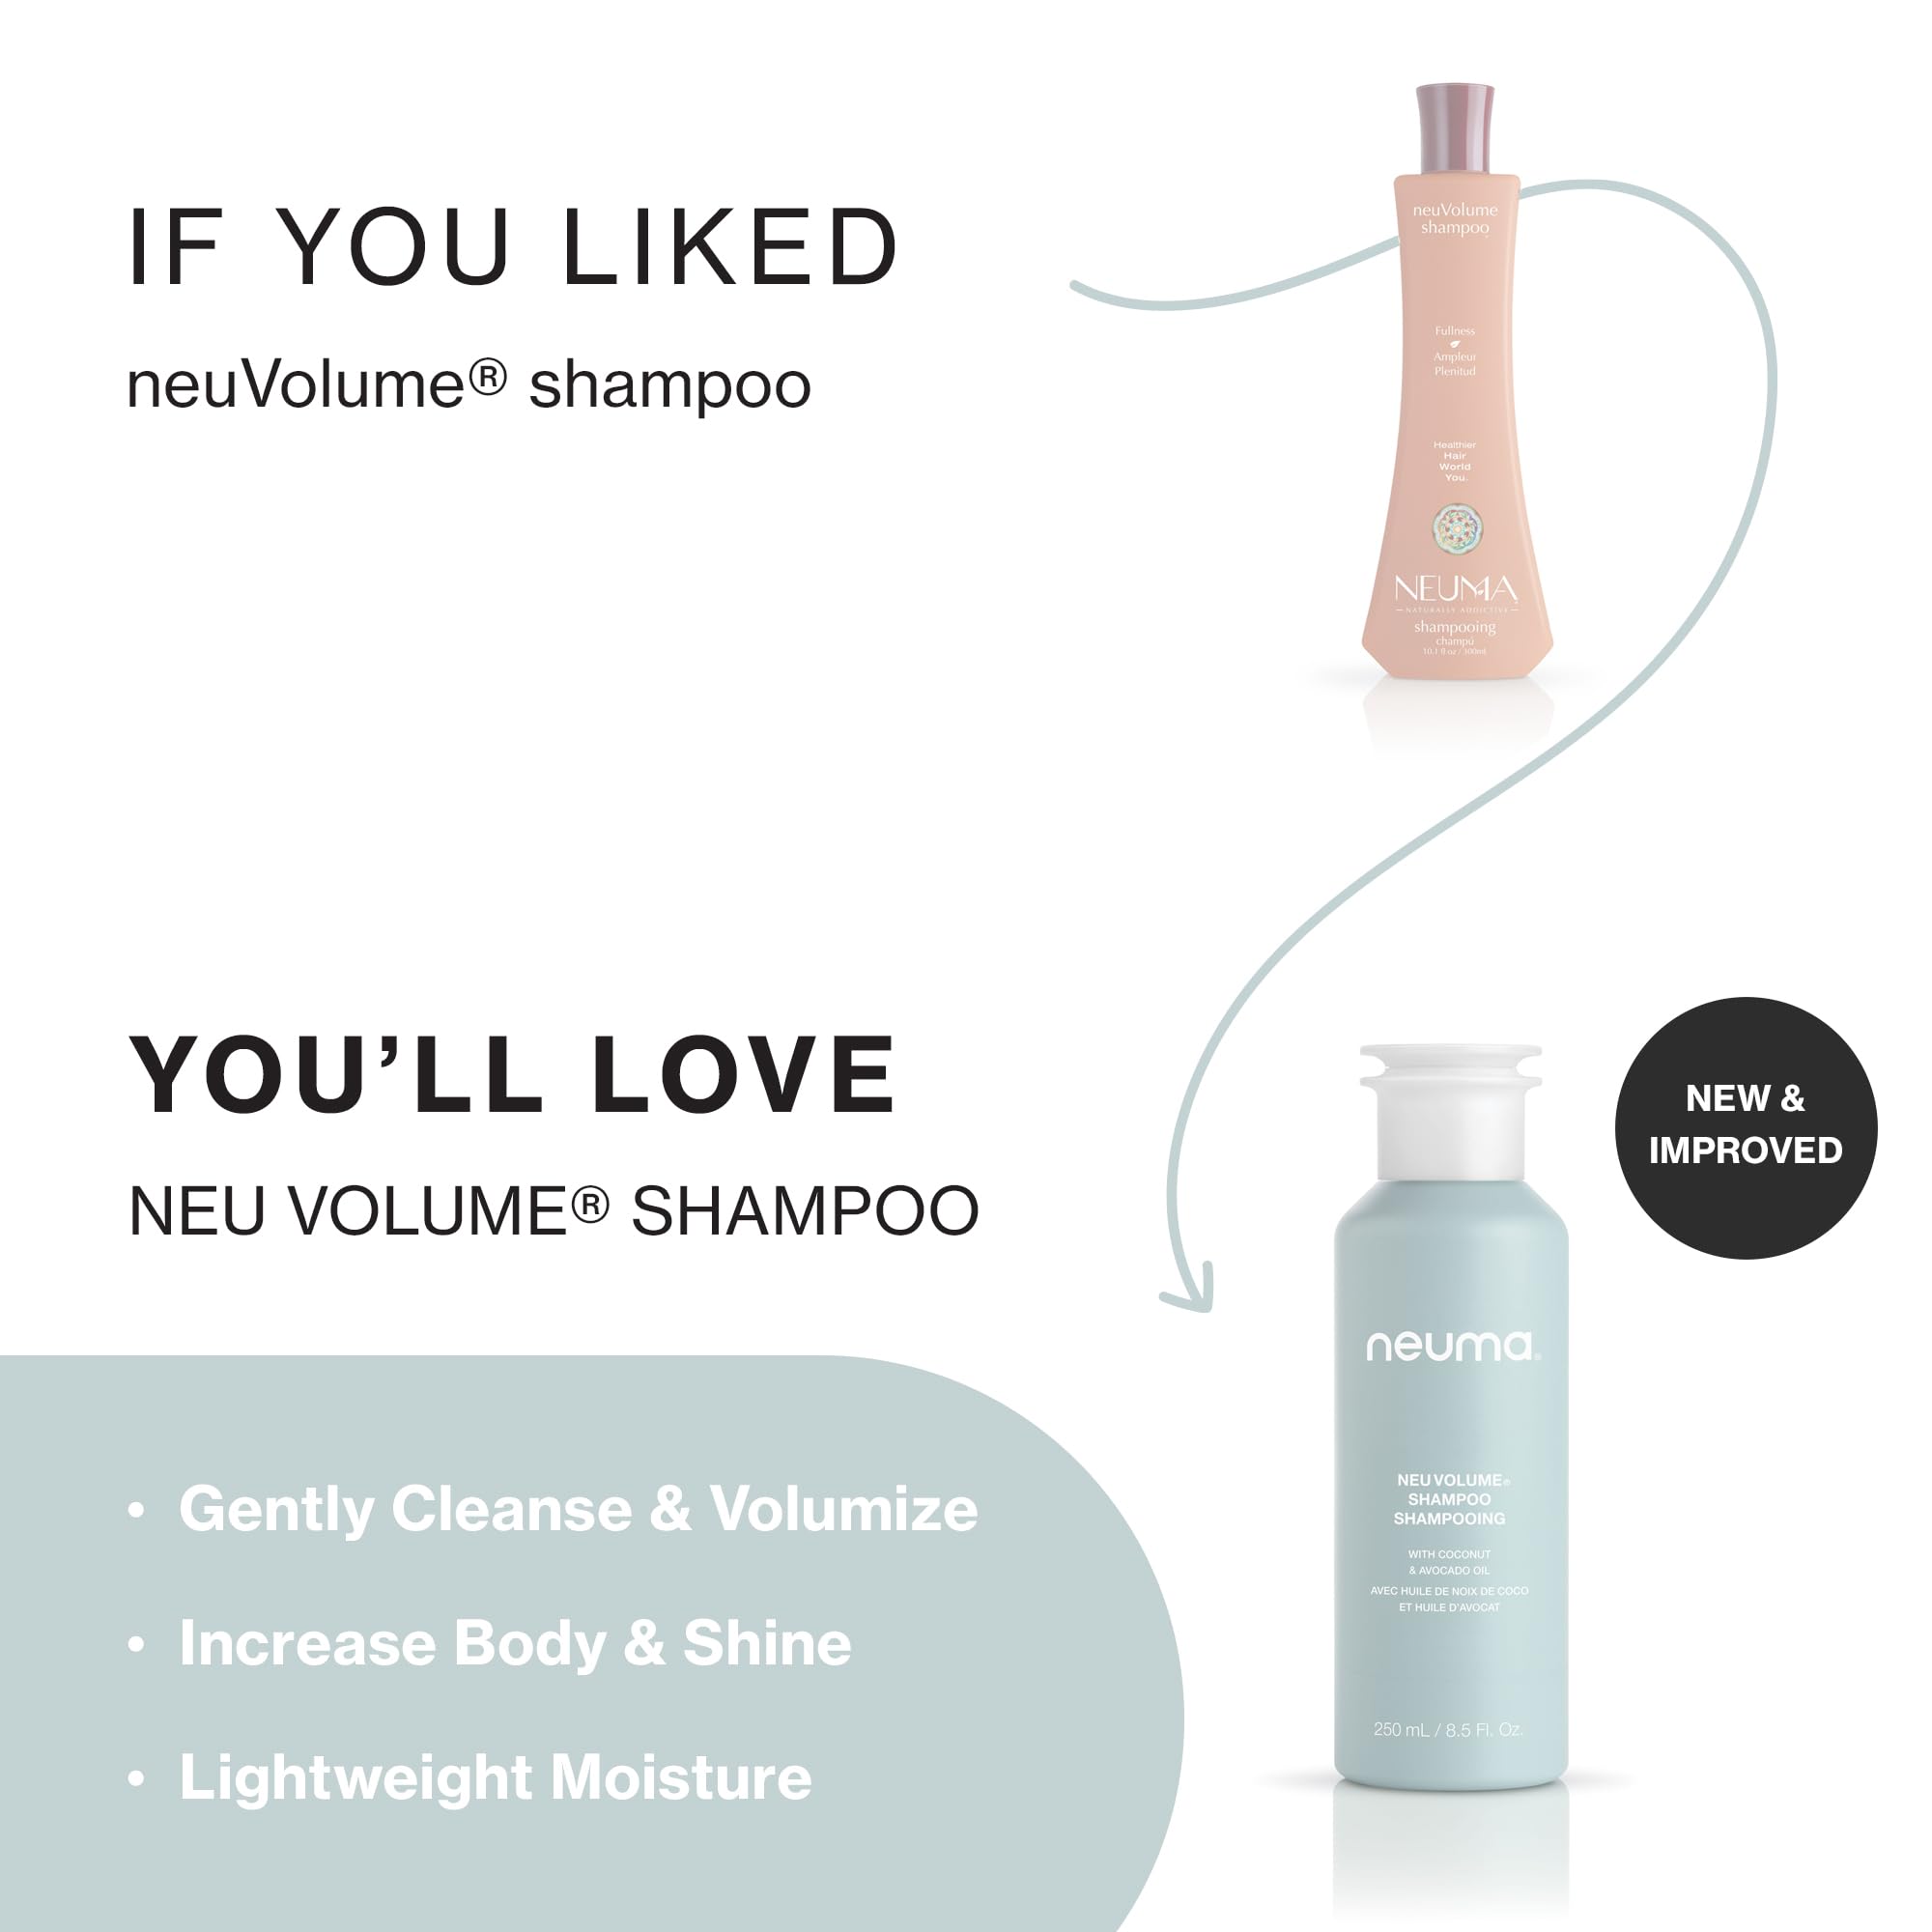 NEUMA Neu Volume Shampoo 8.5 fl oz